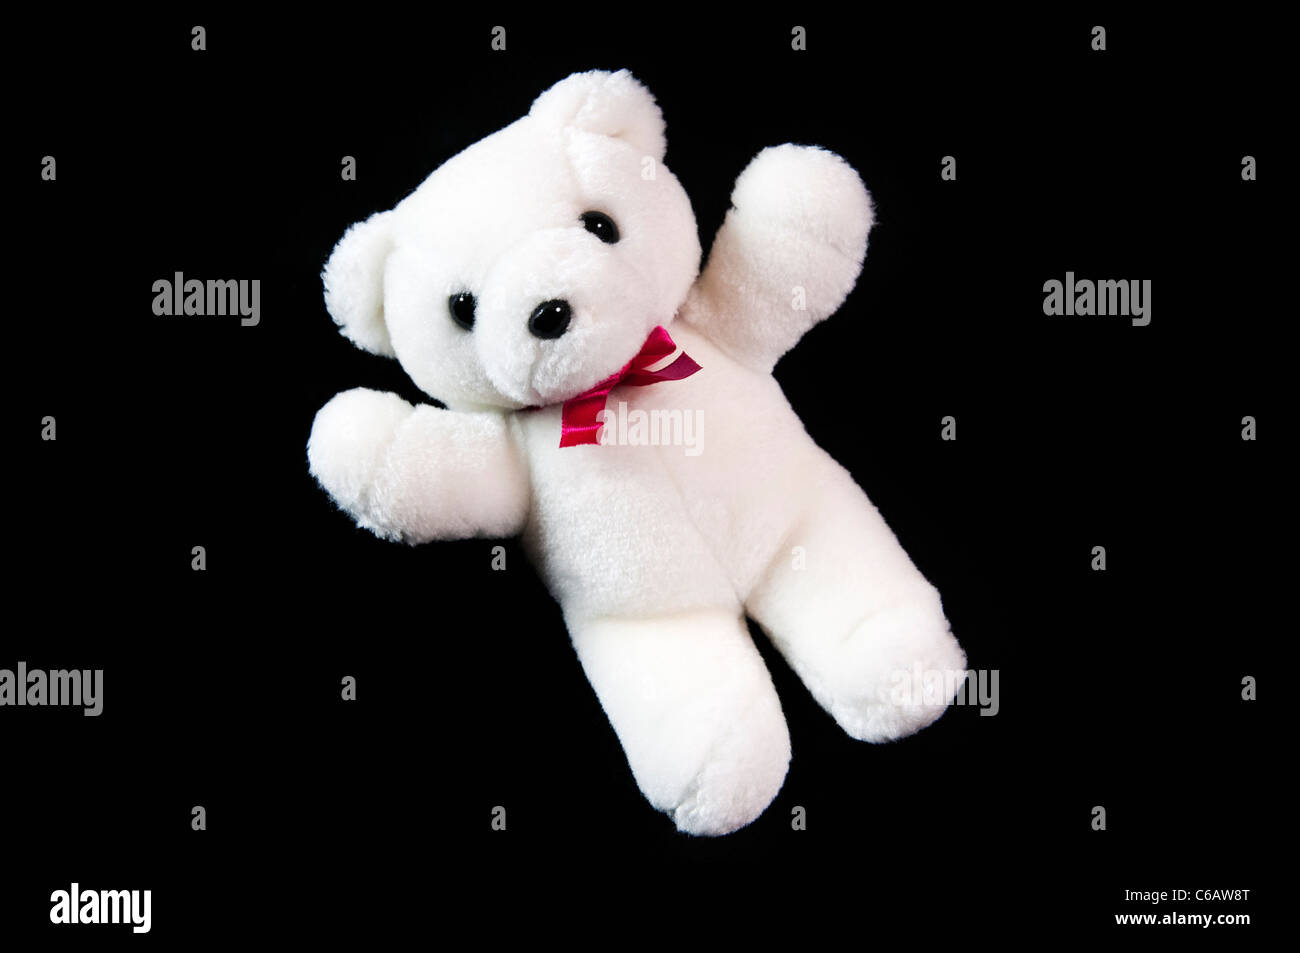 White teddy bear on black background Stock Photo